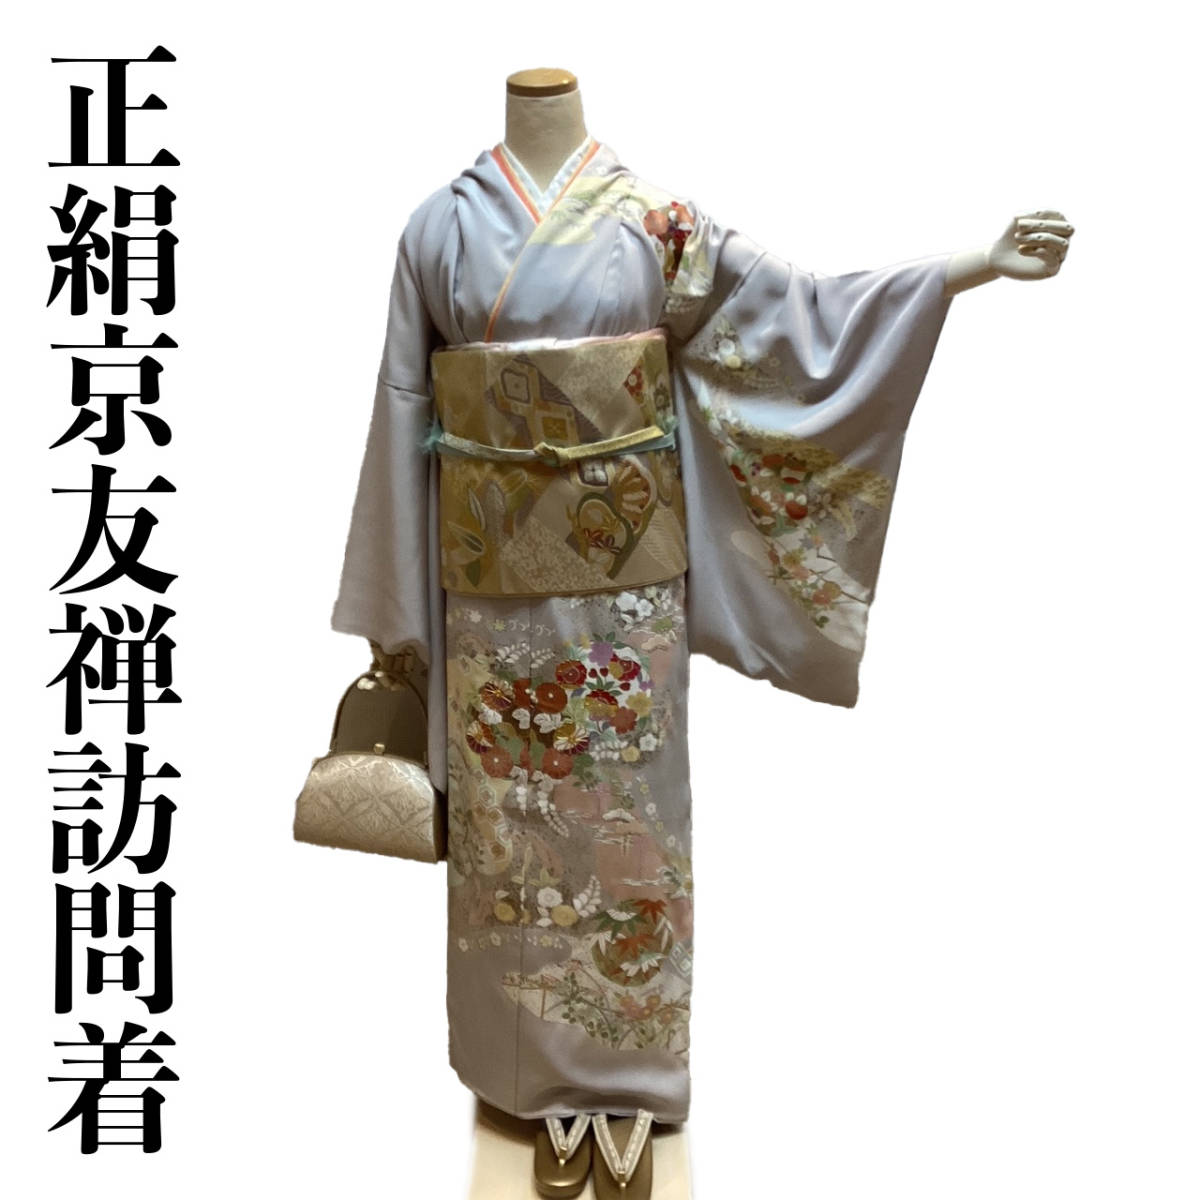 Homongi 剪裁 ho236t 纯丝 手绘京友禅 古典季节性花卉图案 由 Hishiken 制造 新品 含运费, 女士和服, 和服, 探访礼服, 不合身